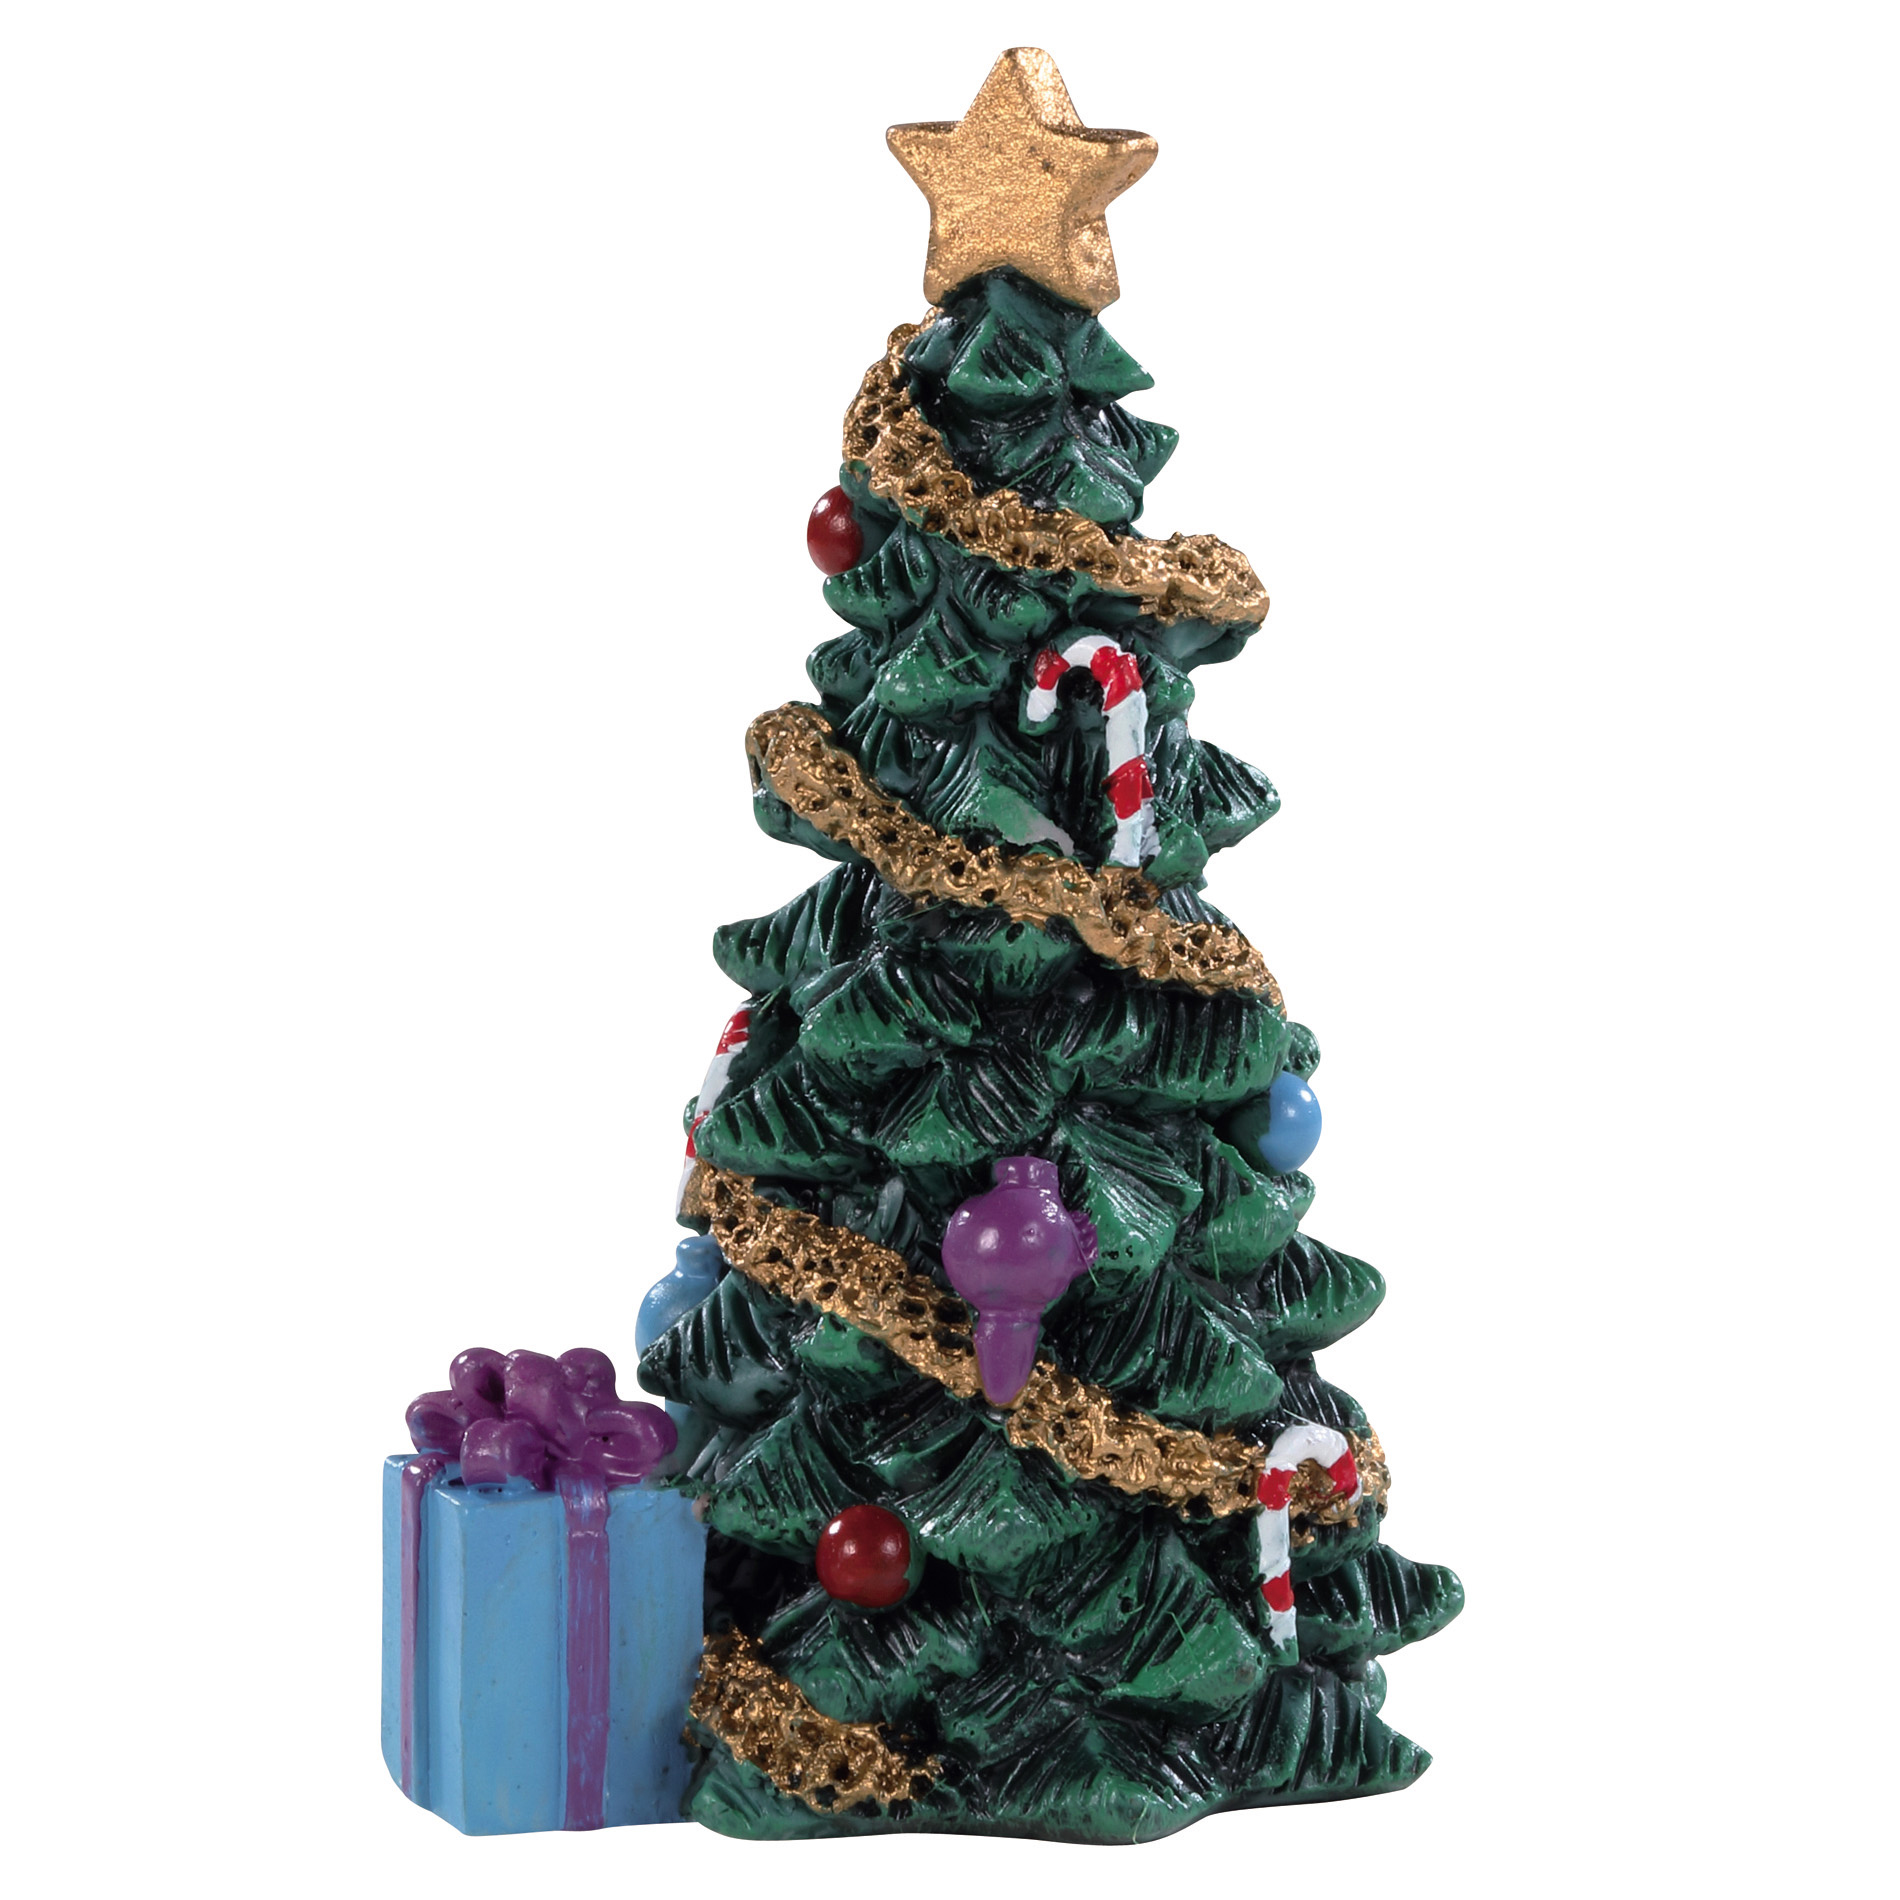 Lemax Christmas Tree Holiday Village Figurine